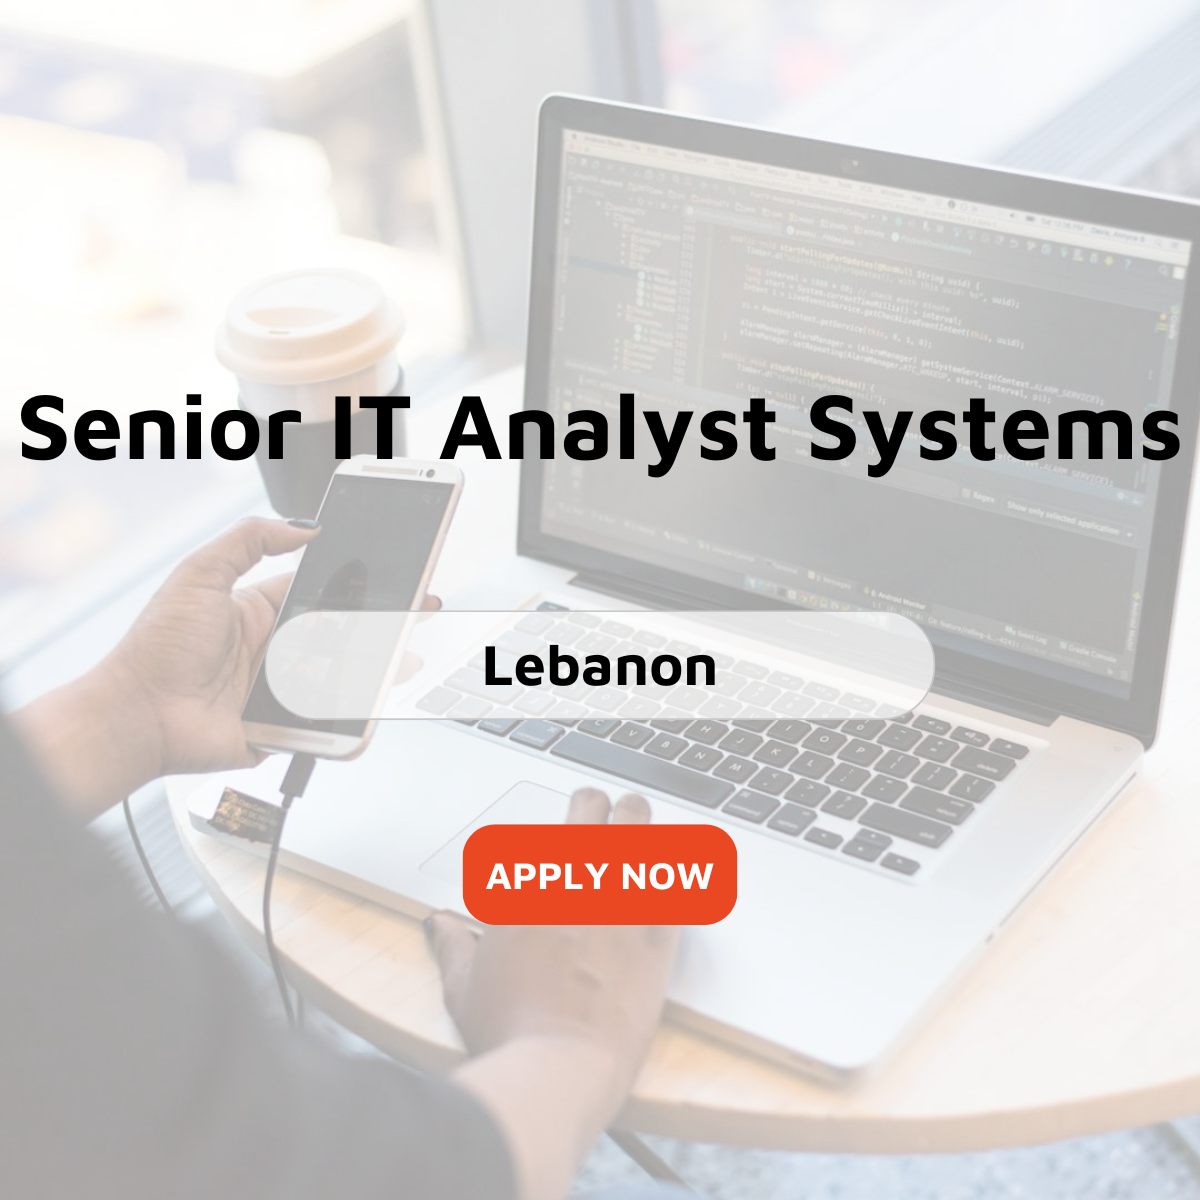 Senior IT Analyst Systems